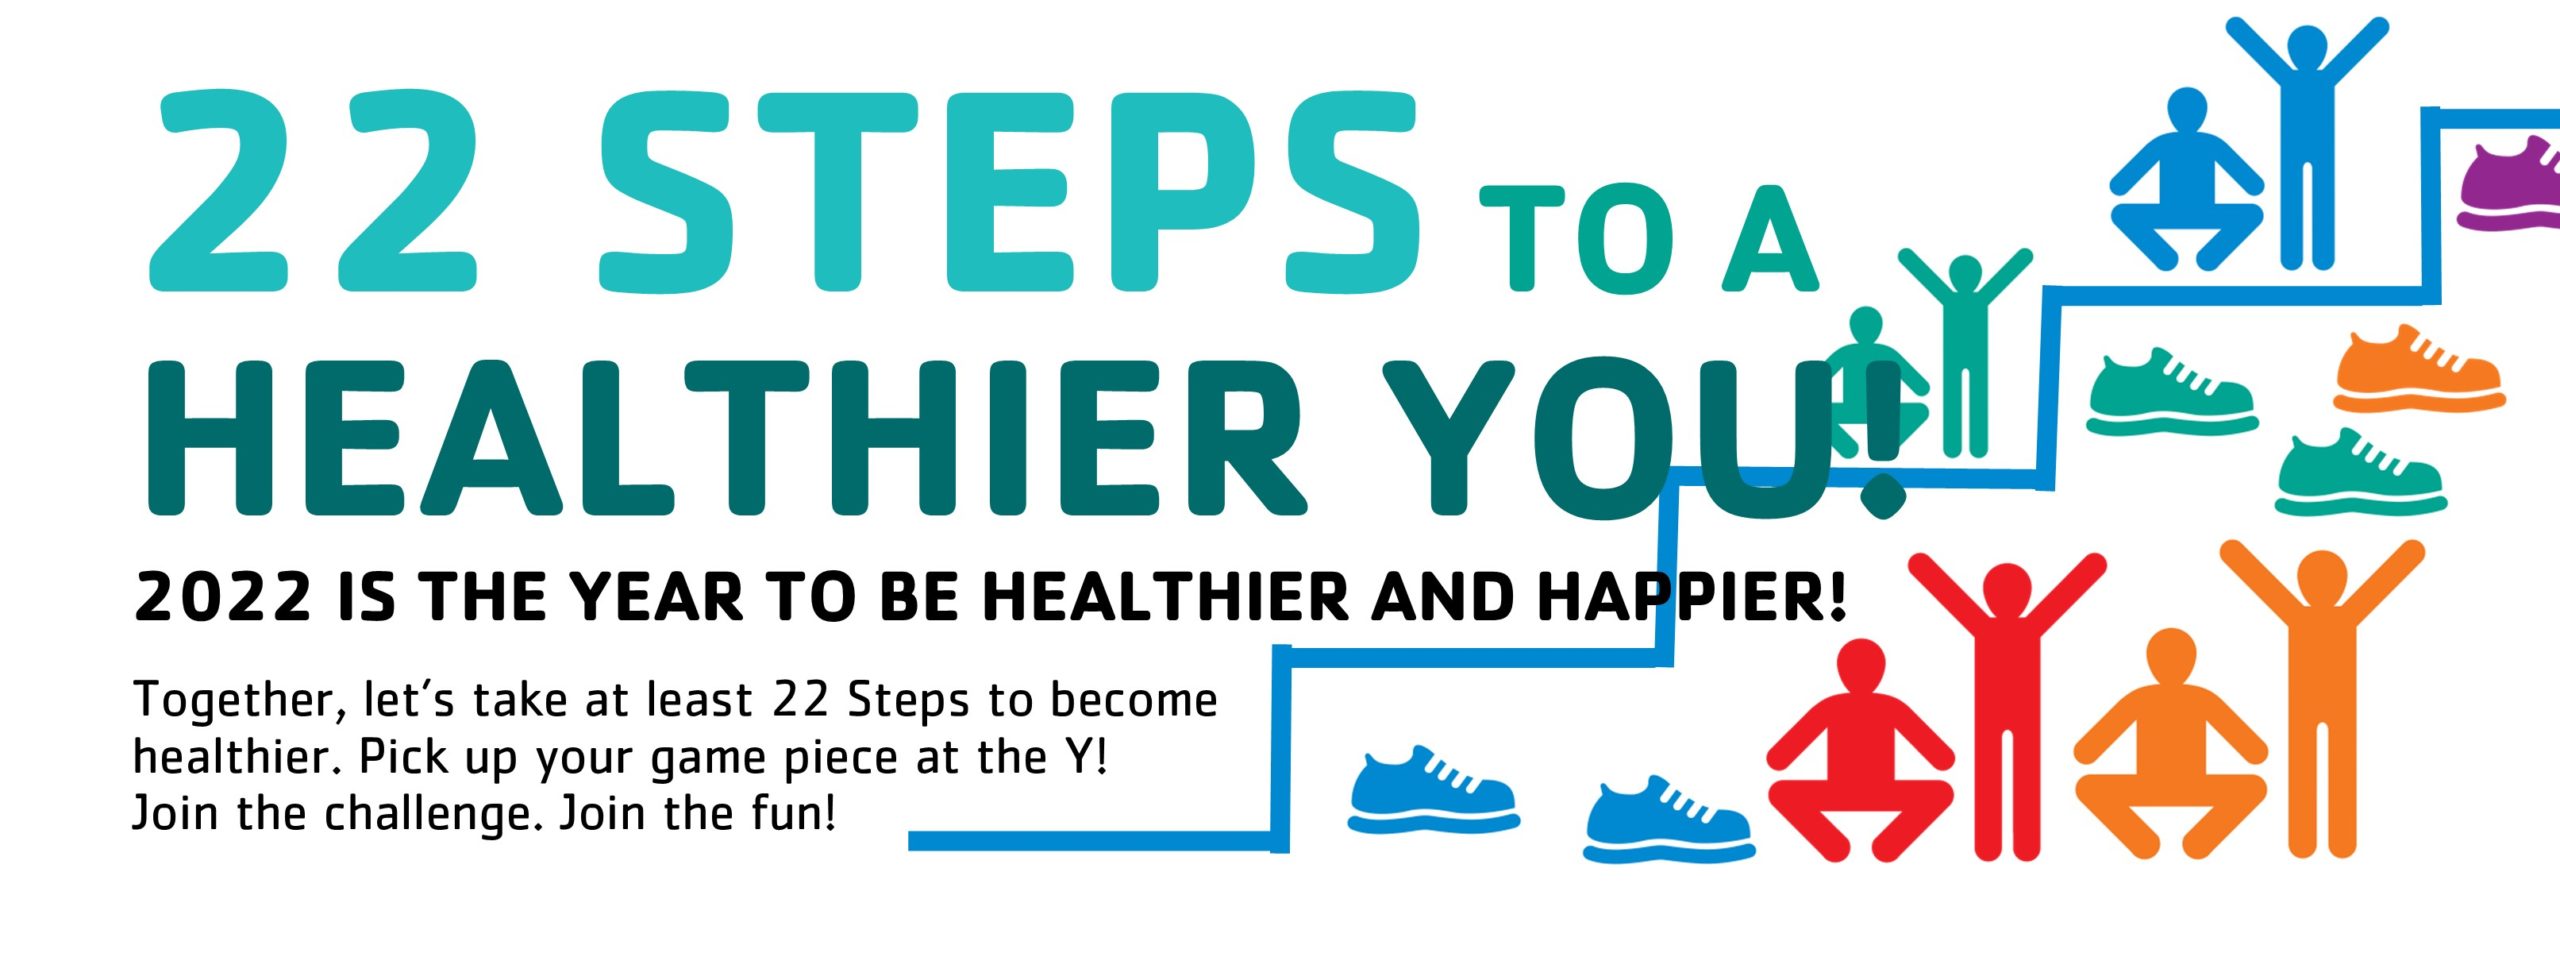 22 Steps to a Healthier You!